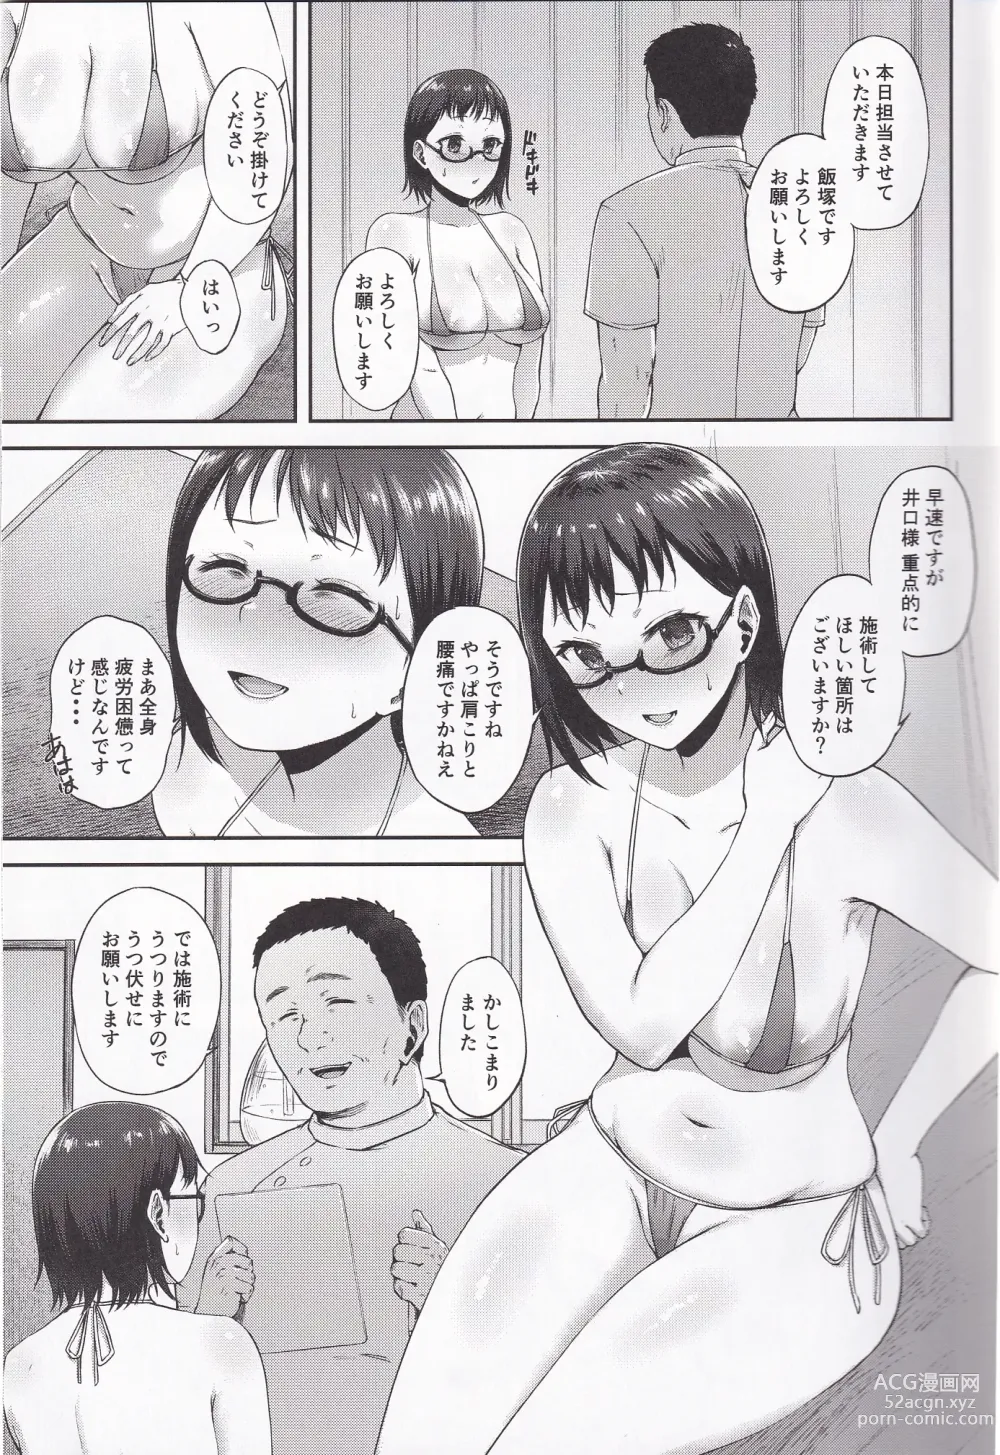 Page 6 of doujinshi Torotoro Hogusare Animator